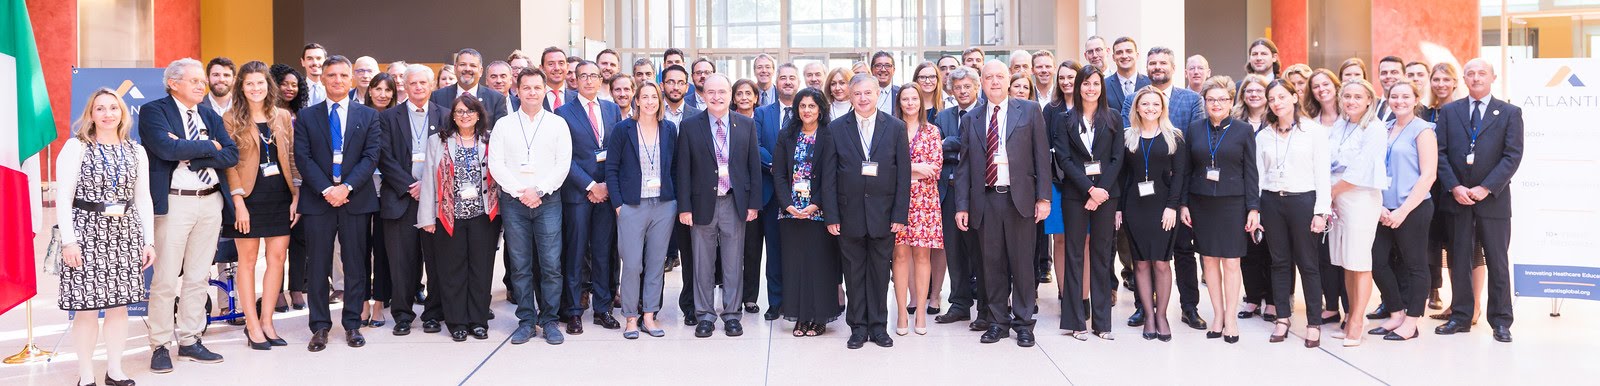 Participants attending the Atlantis Global Health Summit in Washington, D.C.